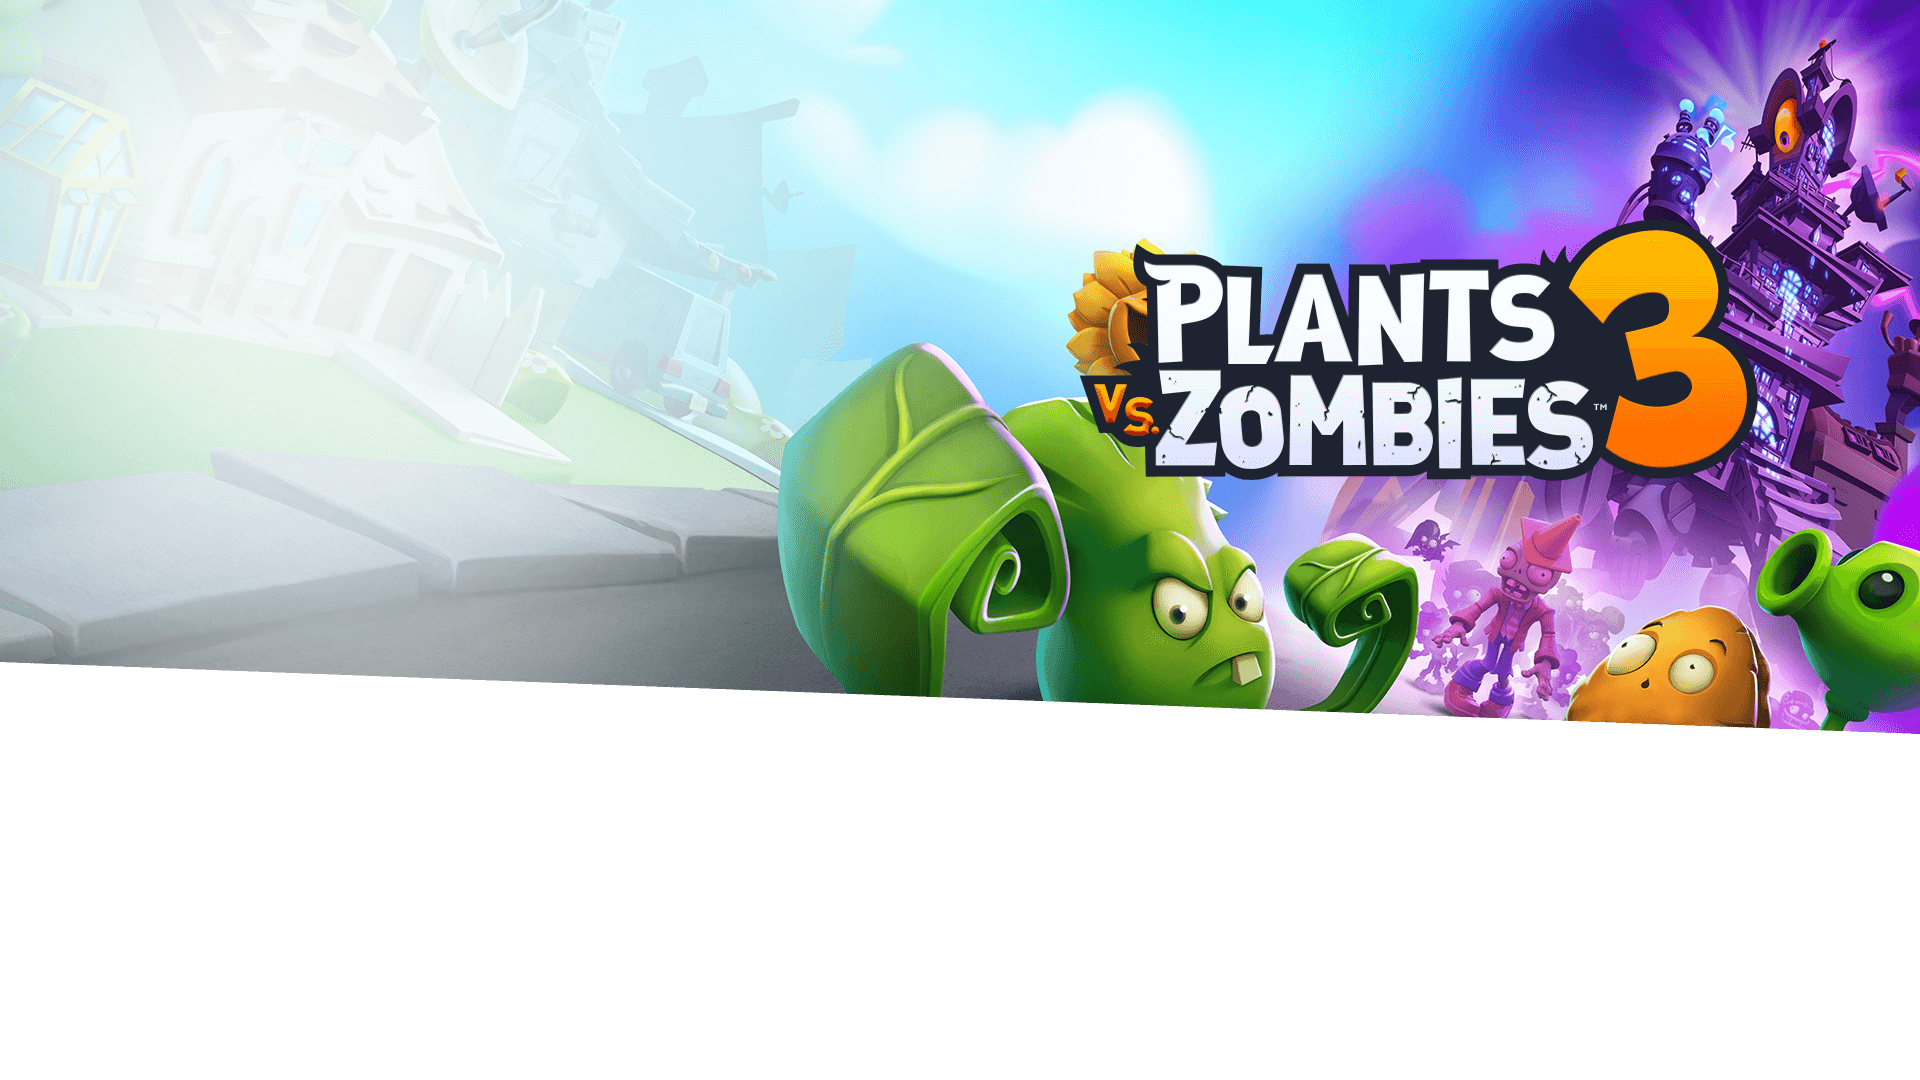 plants vs zombie 3 download free